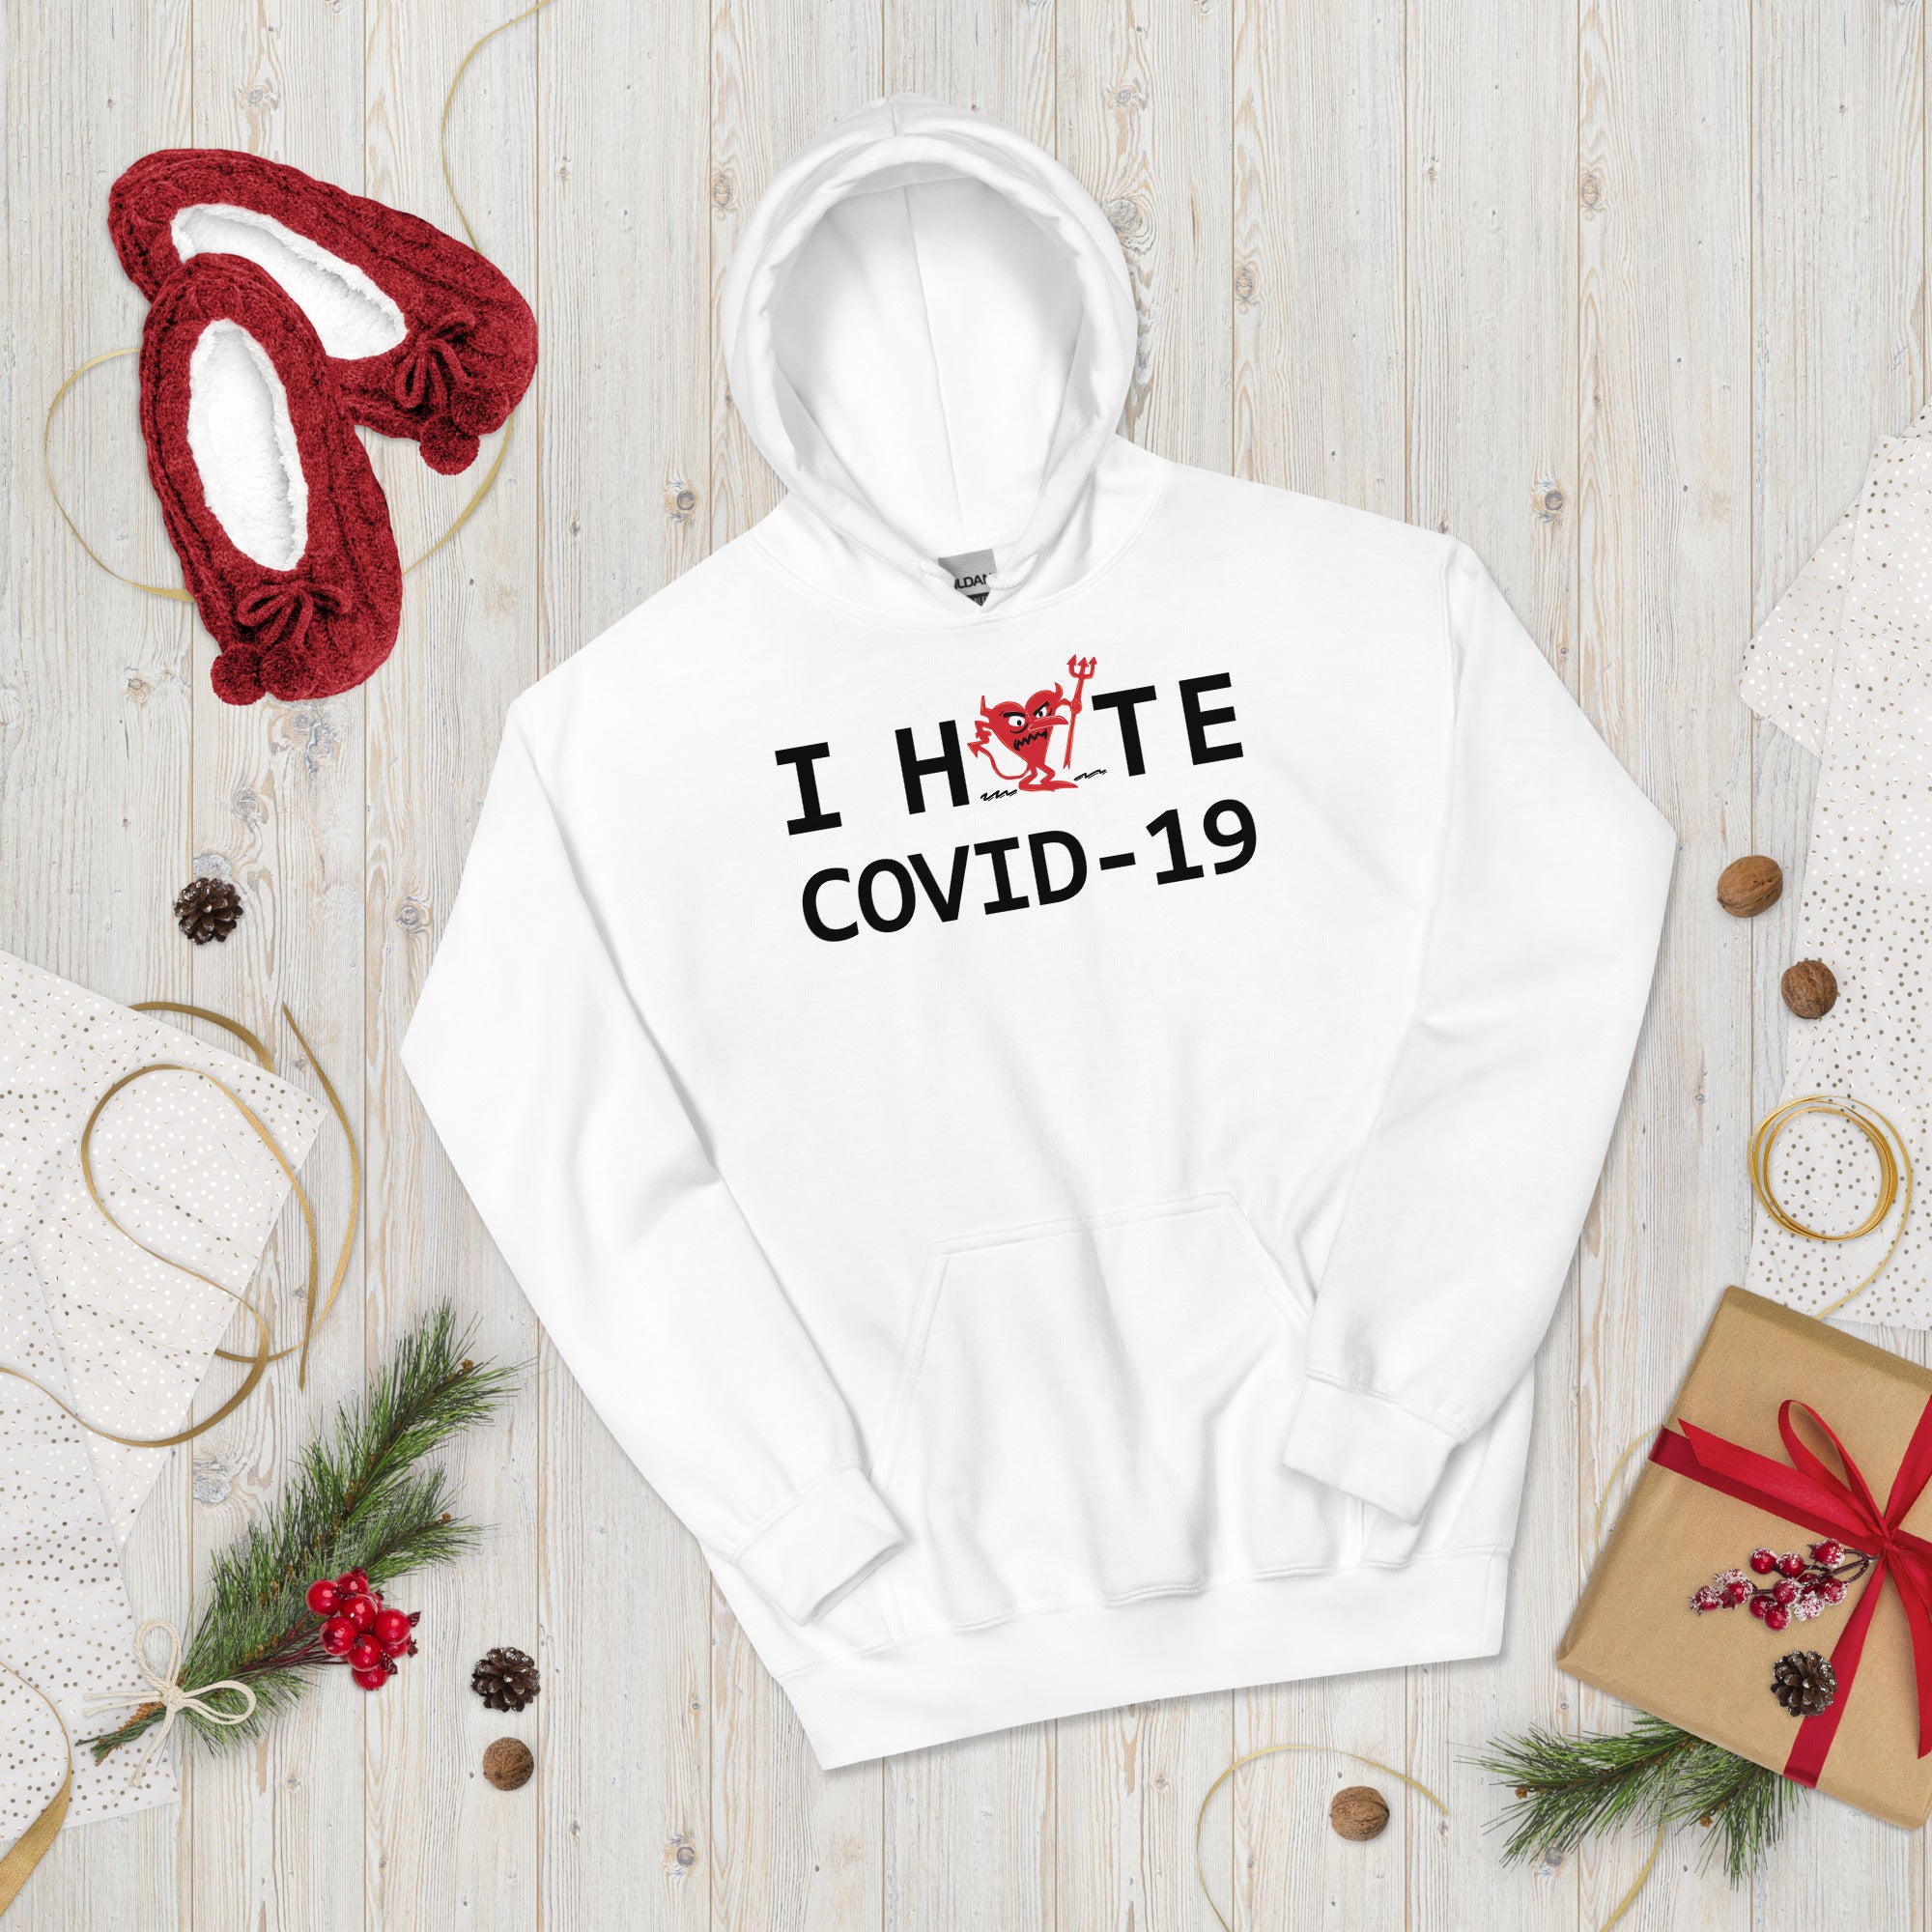 I Hate COVID-19 Unisex Hoodie